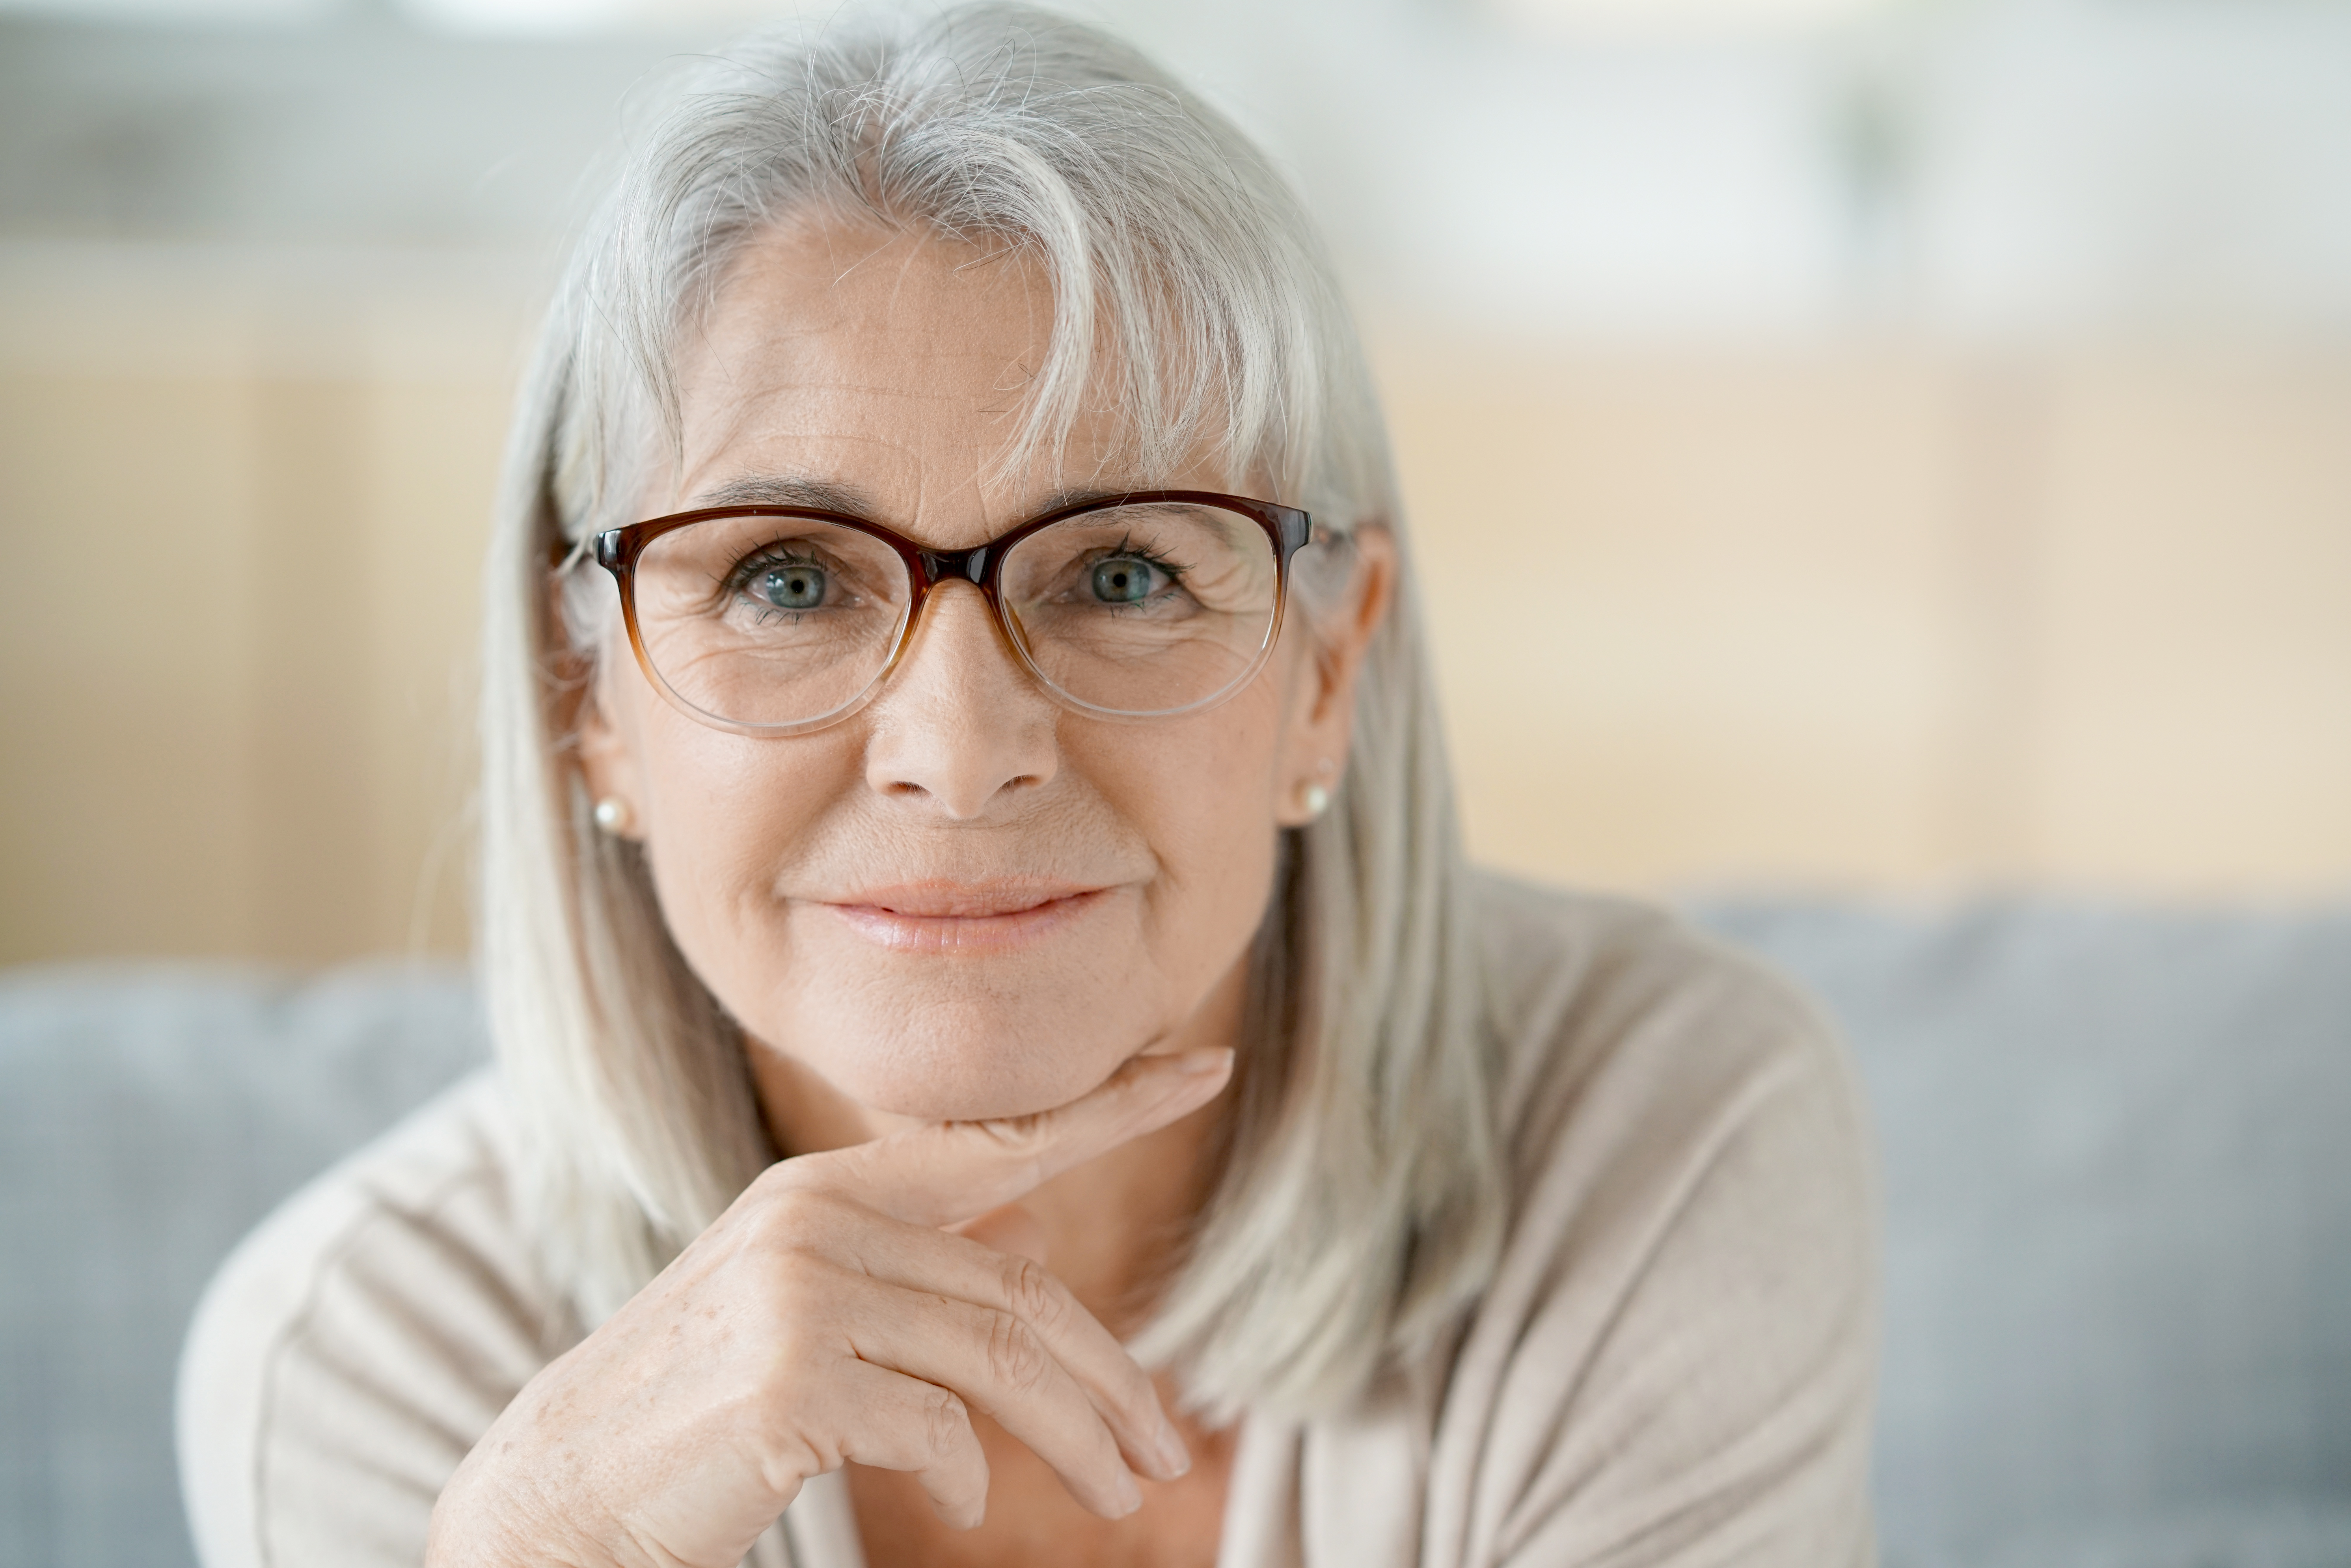 A smiling senior woman | Source: Shutterstock